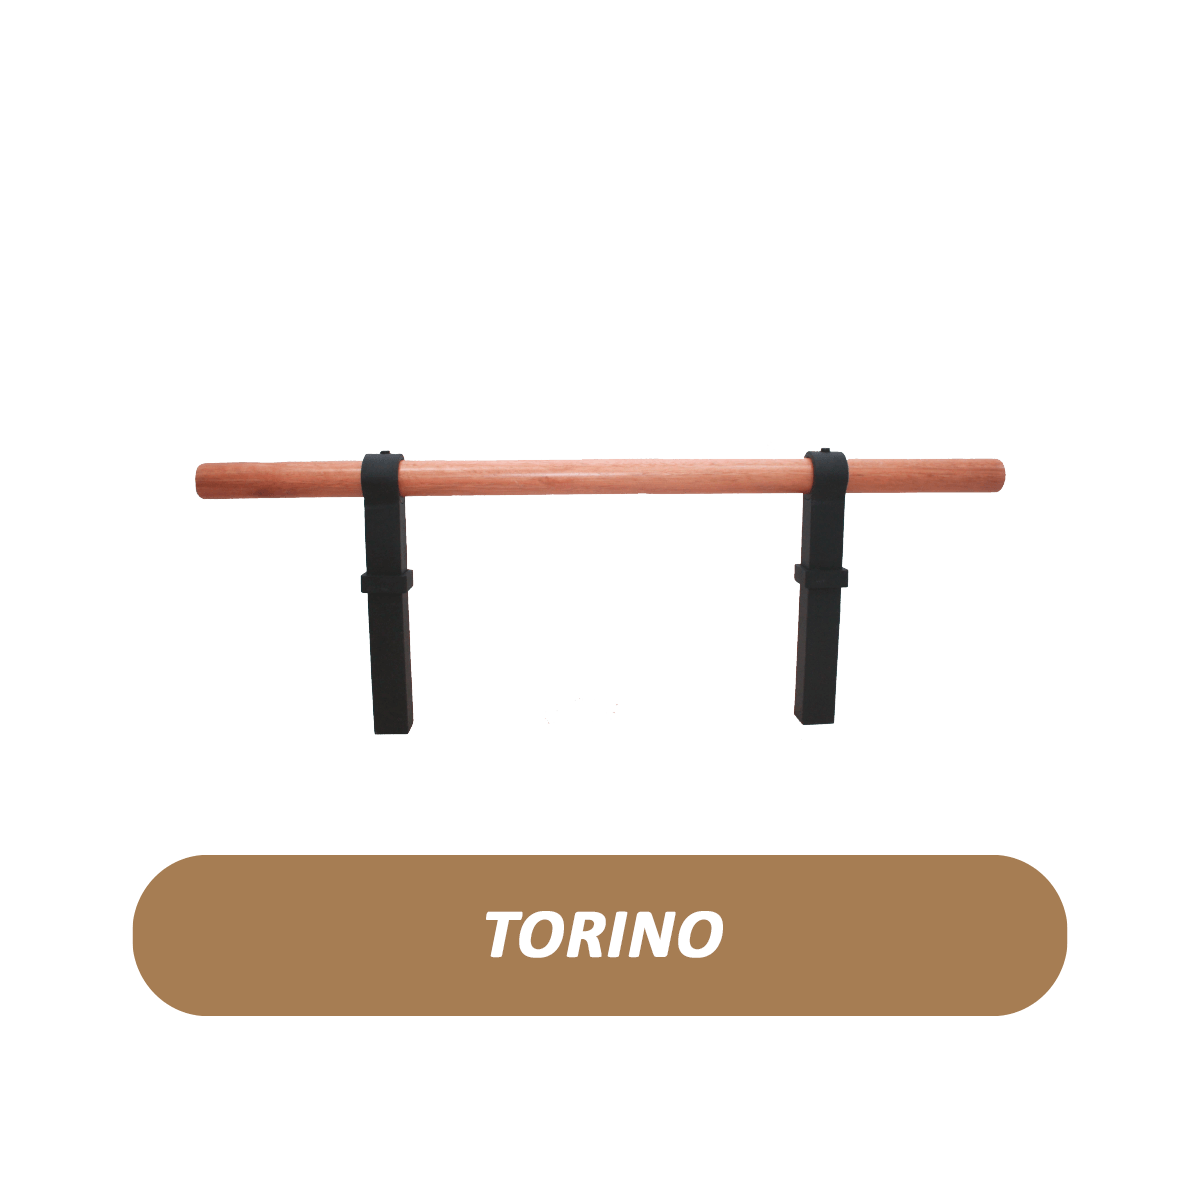 Torino MetaLife